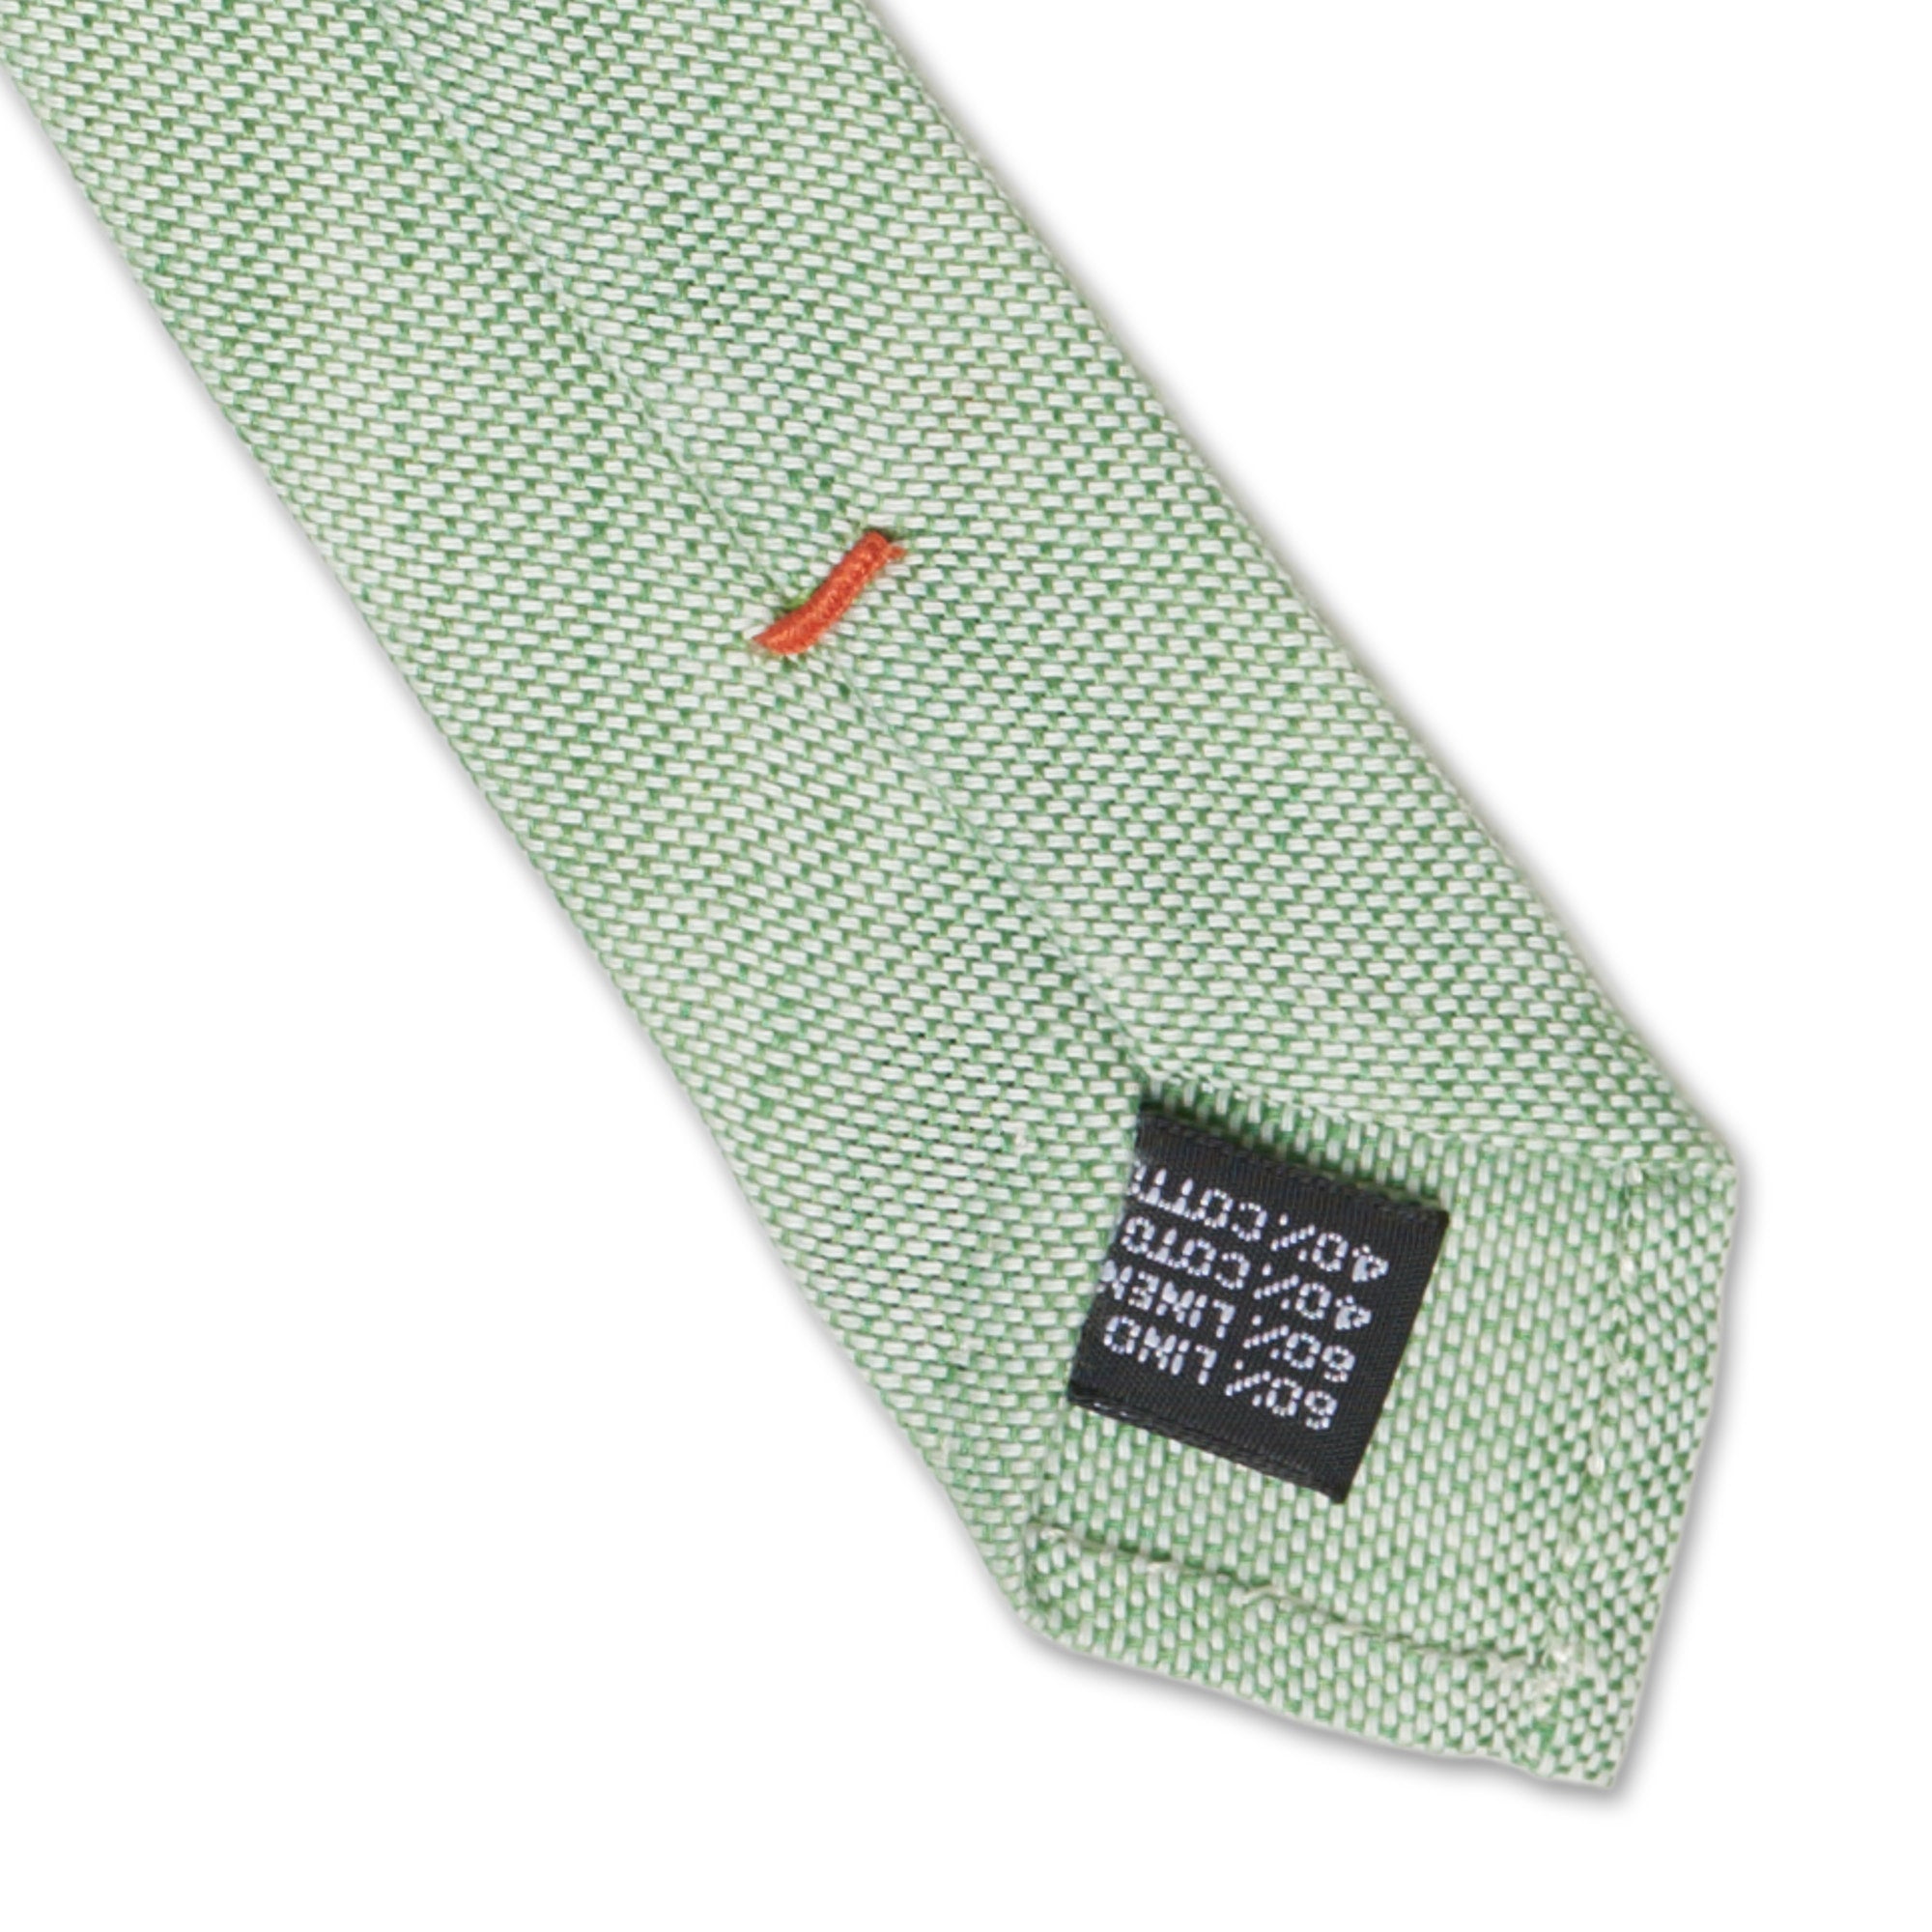 GIUSTO Bespoke Handmade Green Linen-Cotton Unlined Tie